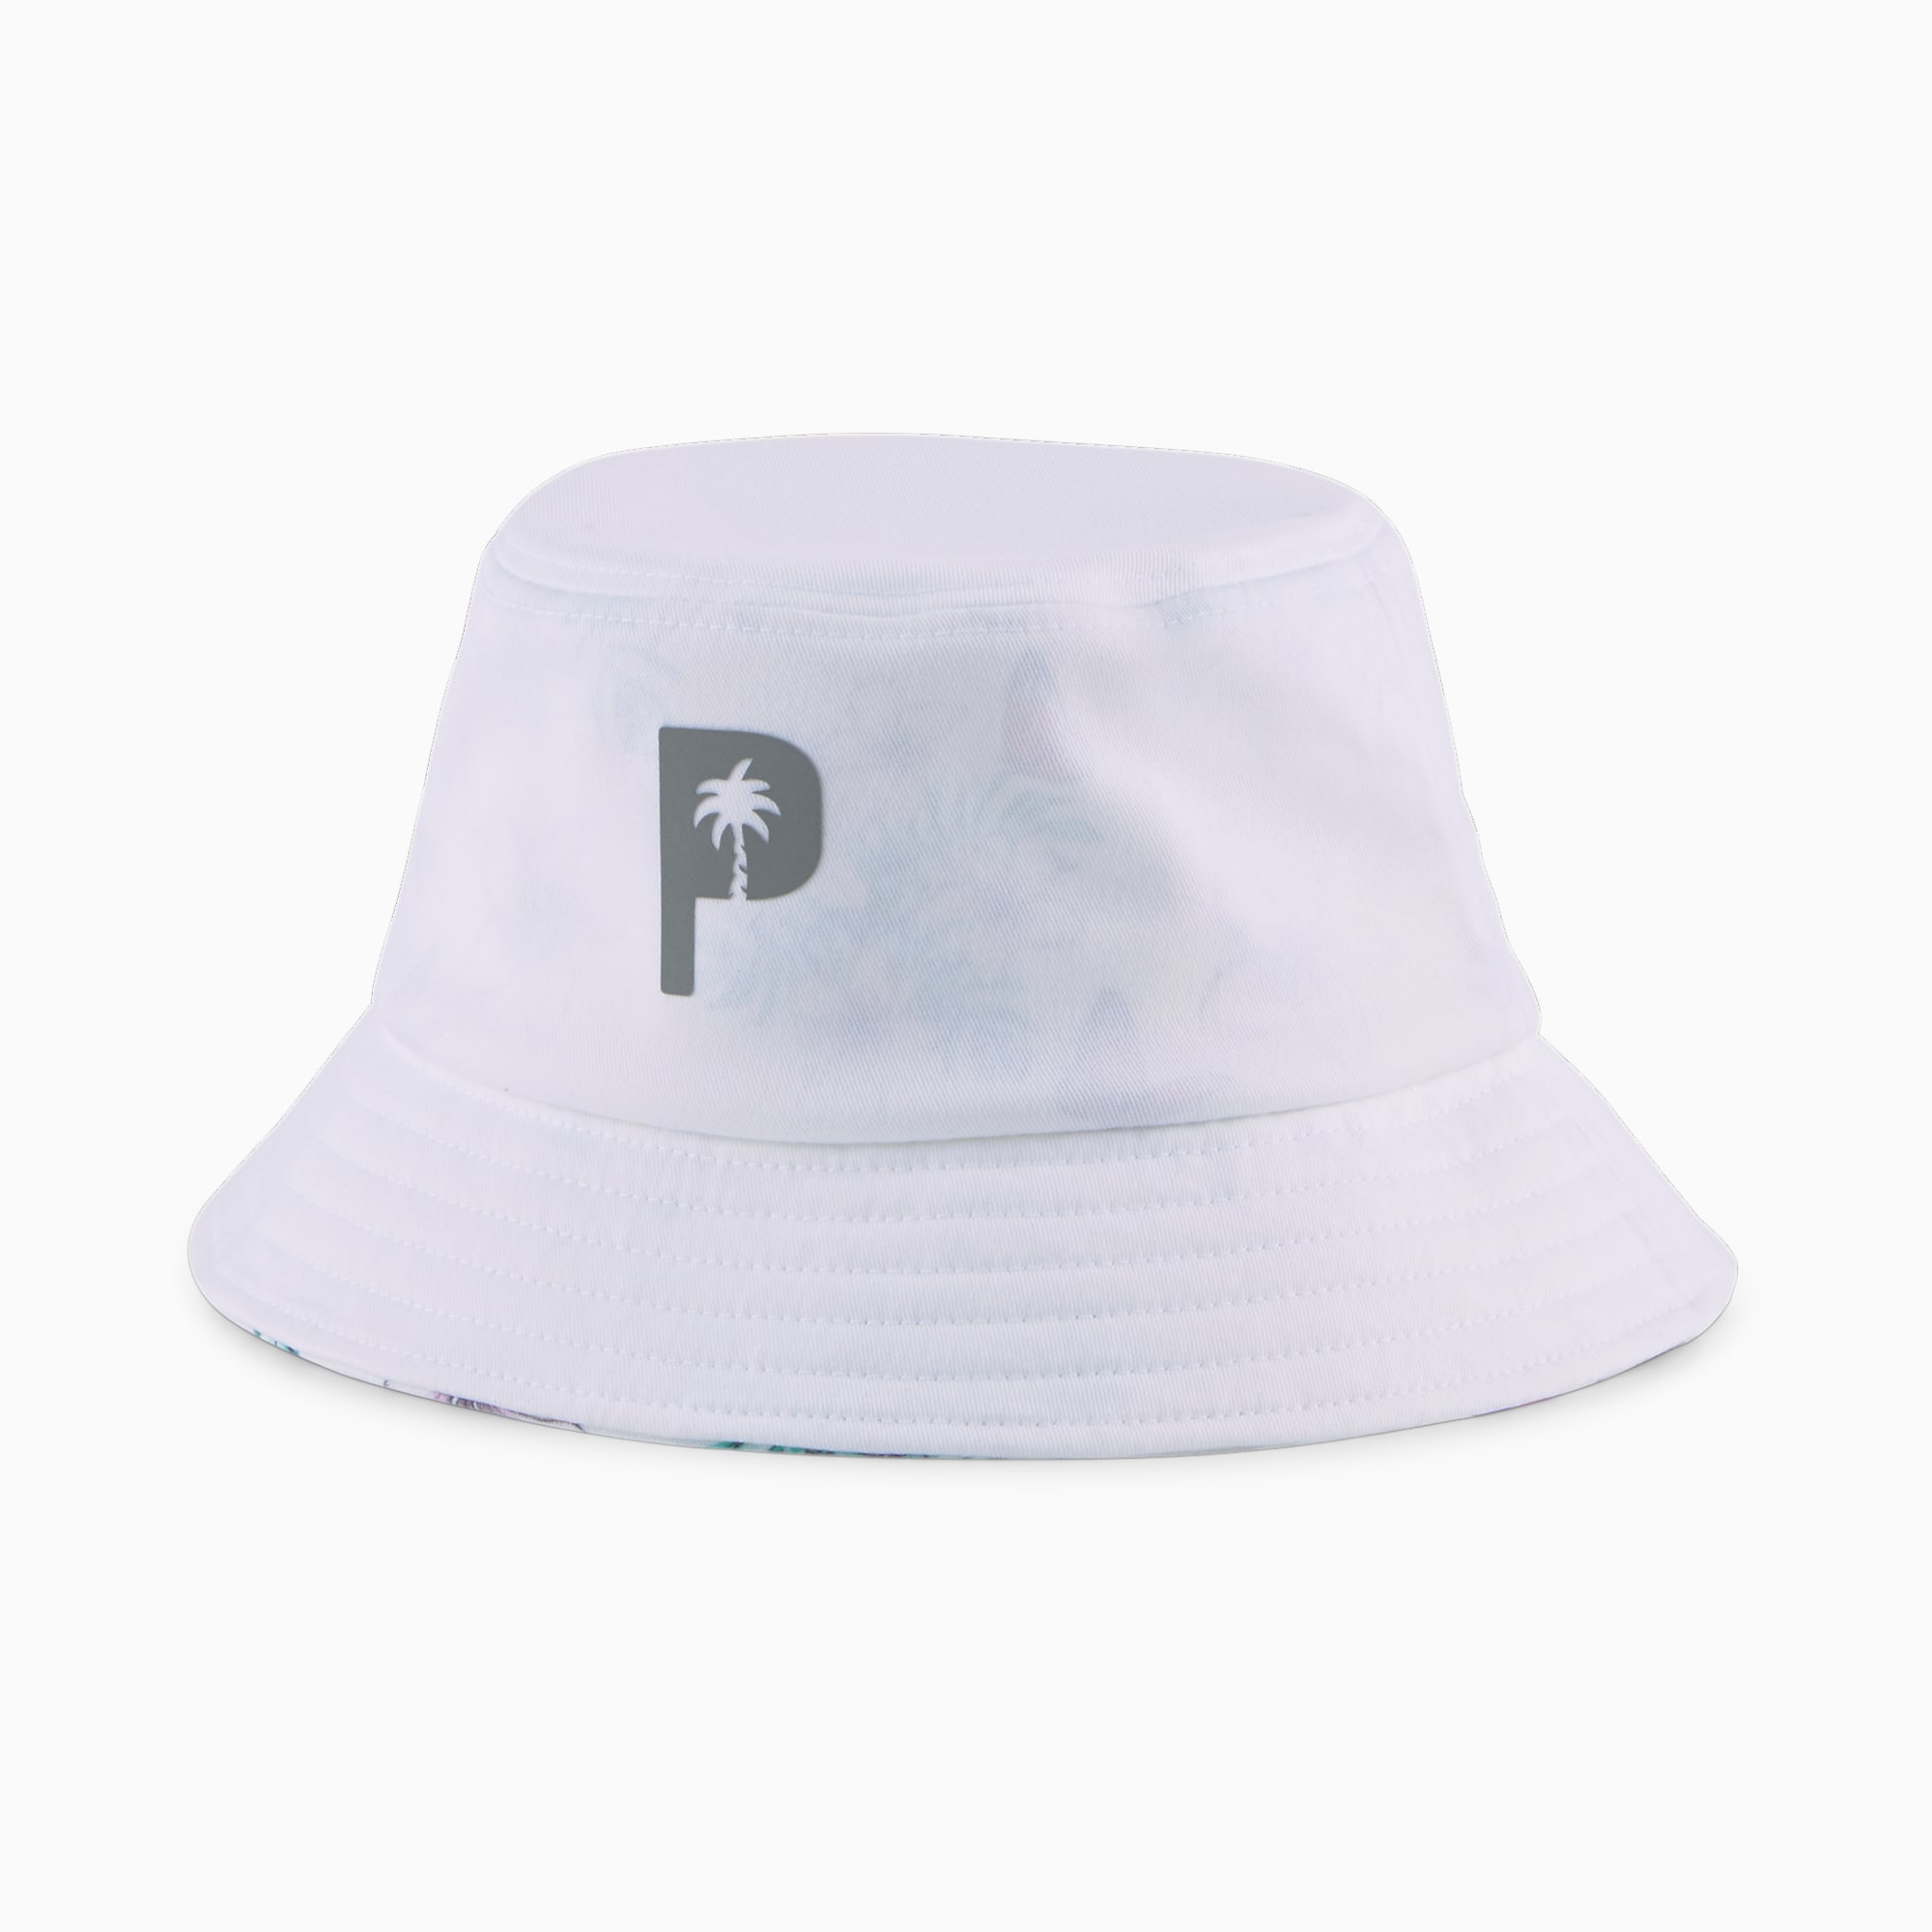 PUMA x Palm Tree Crew Golf Bucket Hat Men